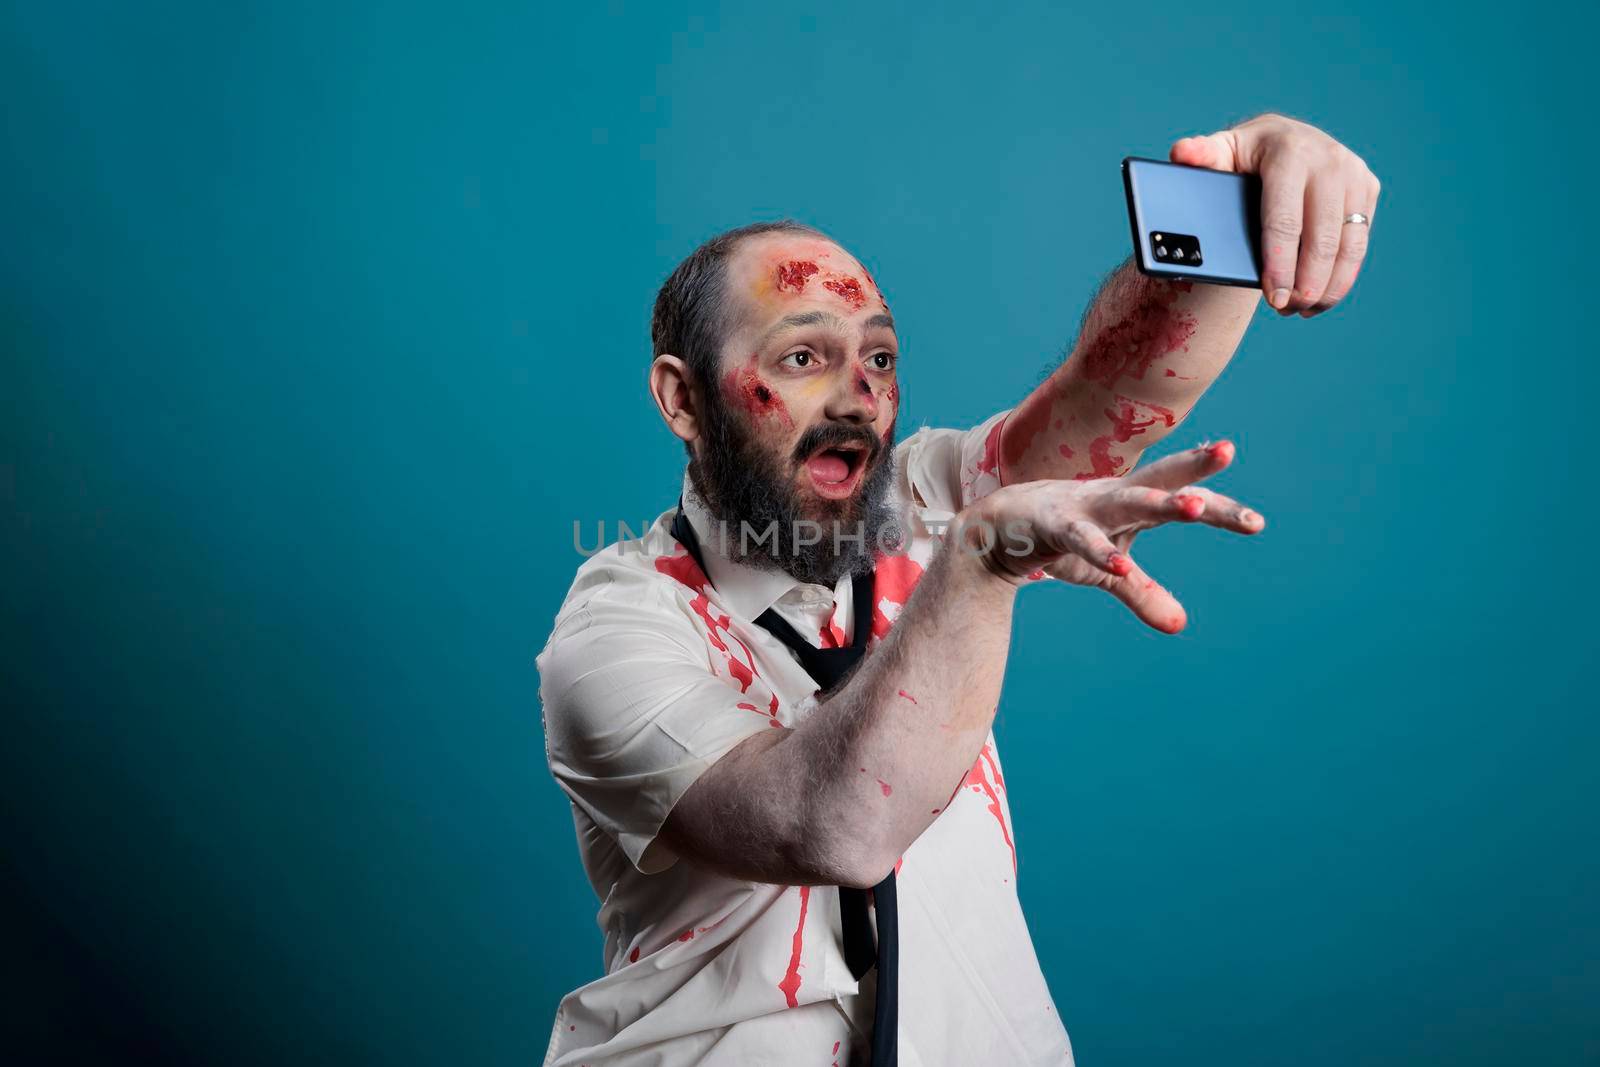 Crazy halloween monster taking photo on smartphone by DCStudio